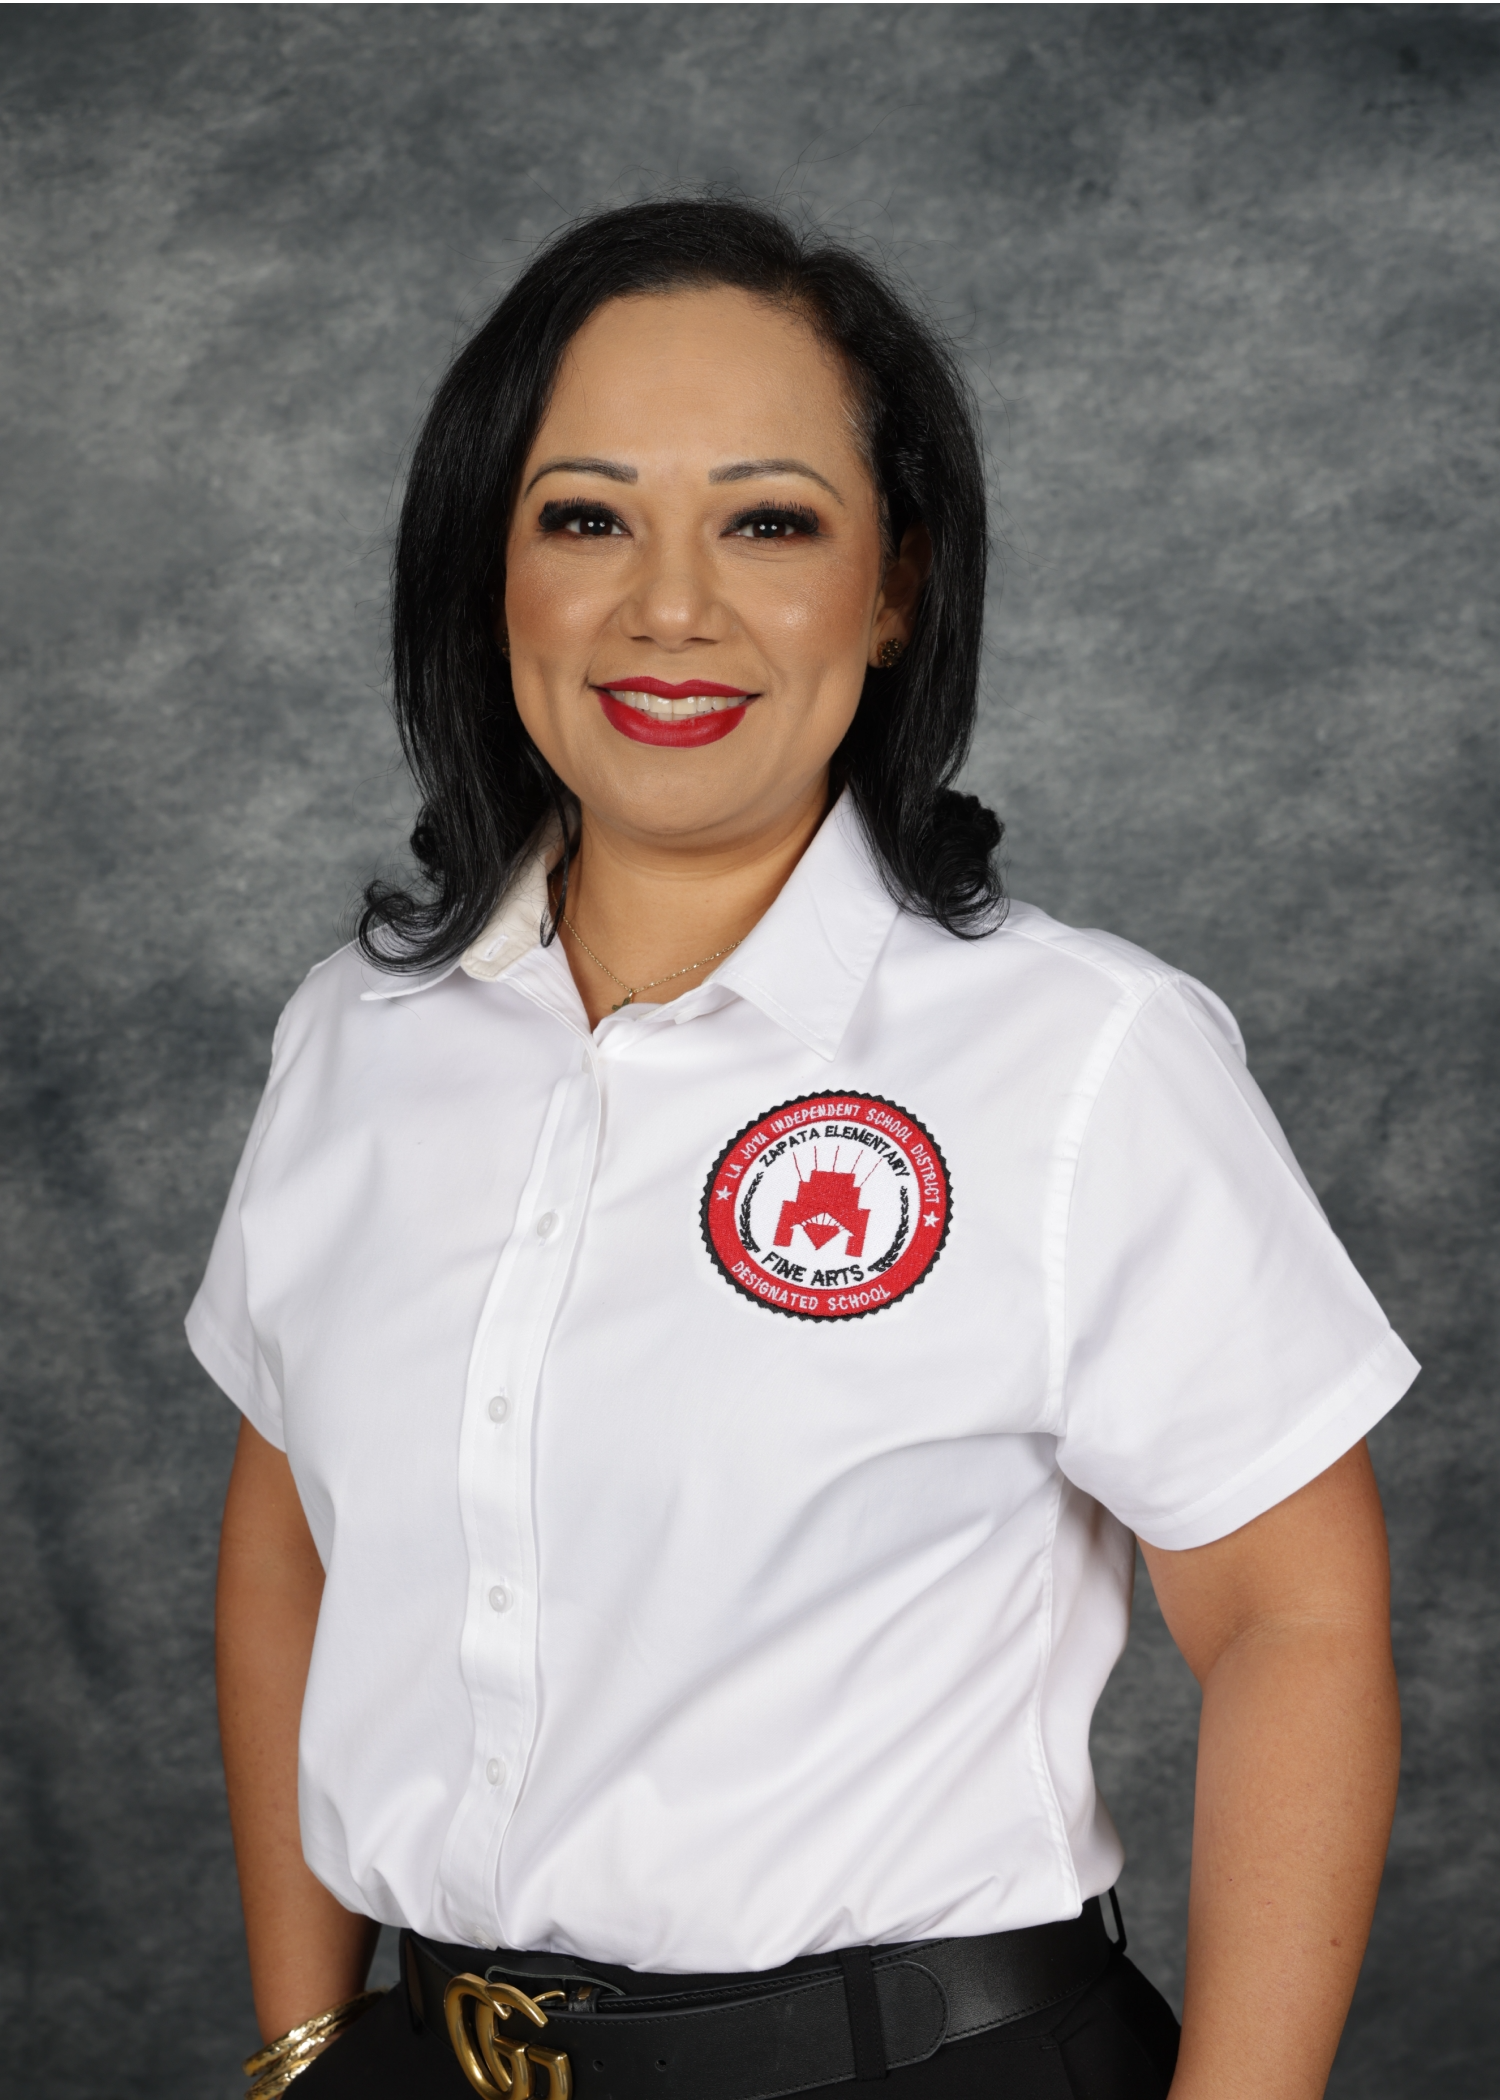 Principal Cynthia Salinas